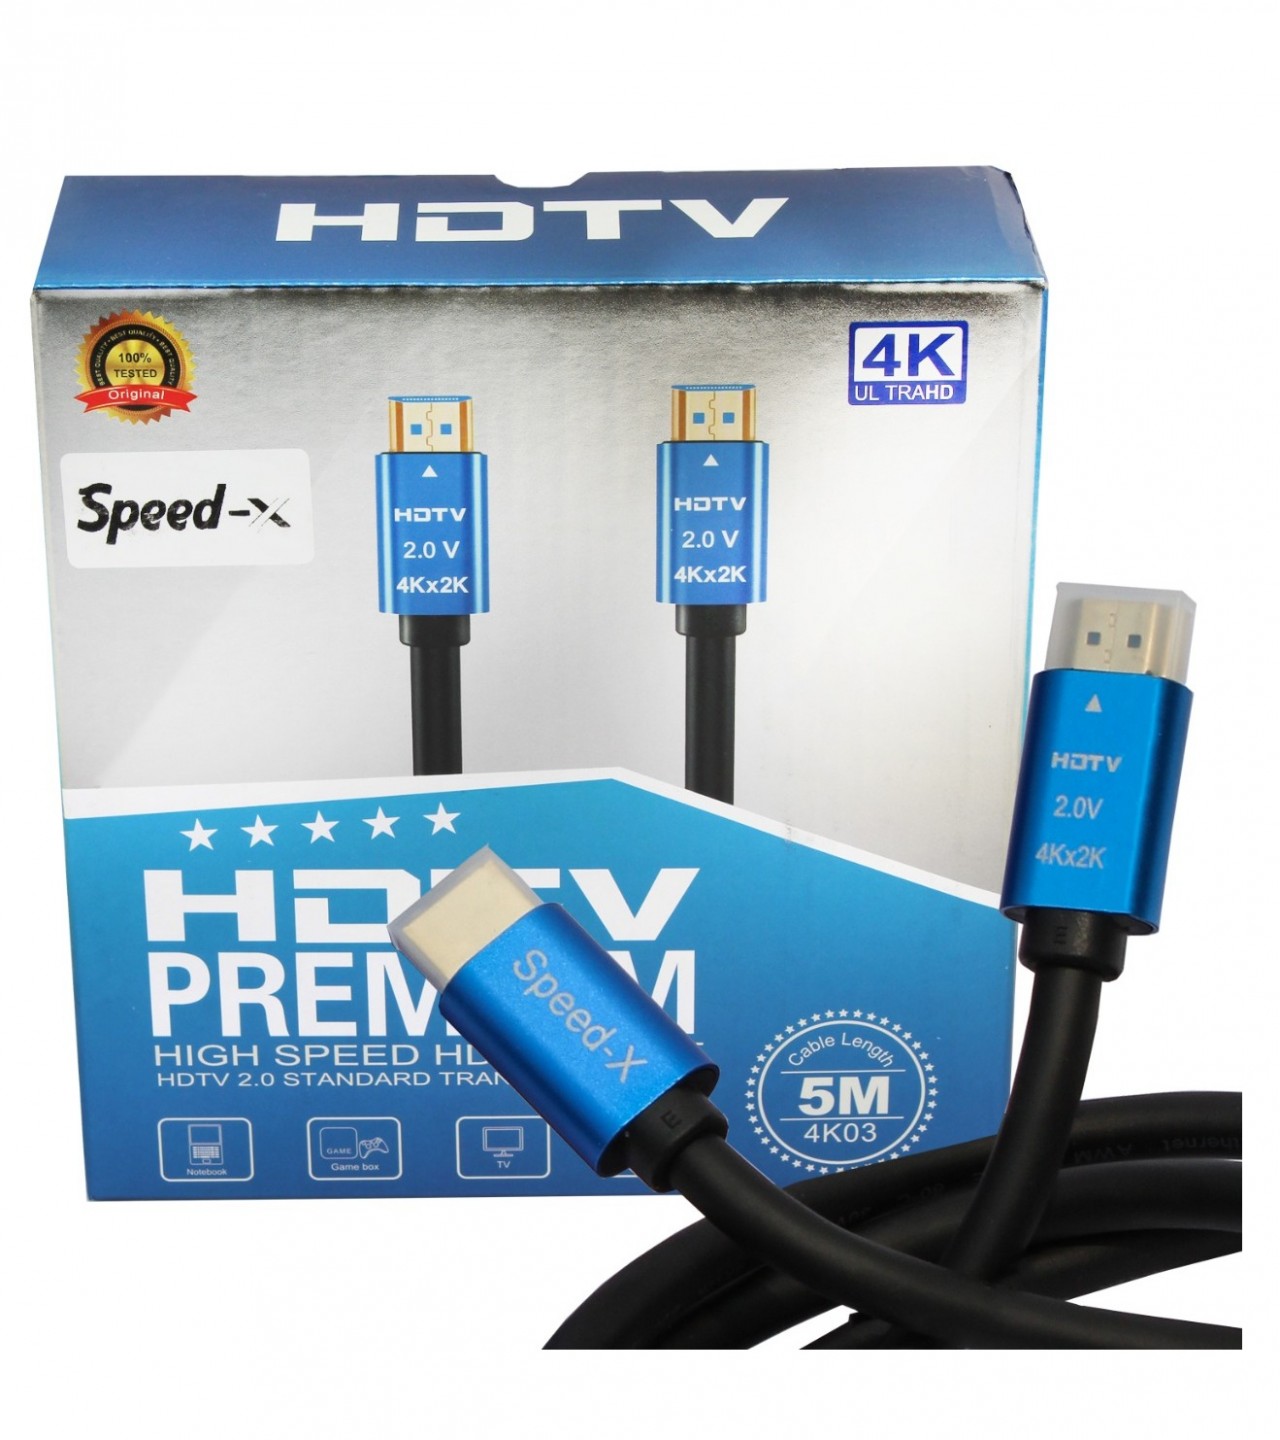 Speed-X 2.0V HDMI Premium Cable Ultra HD 4k 5m